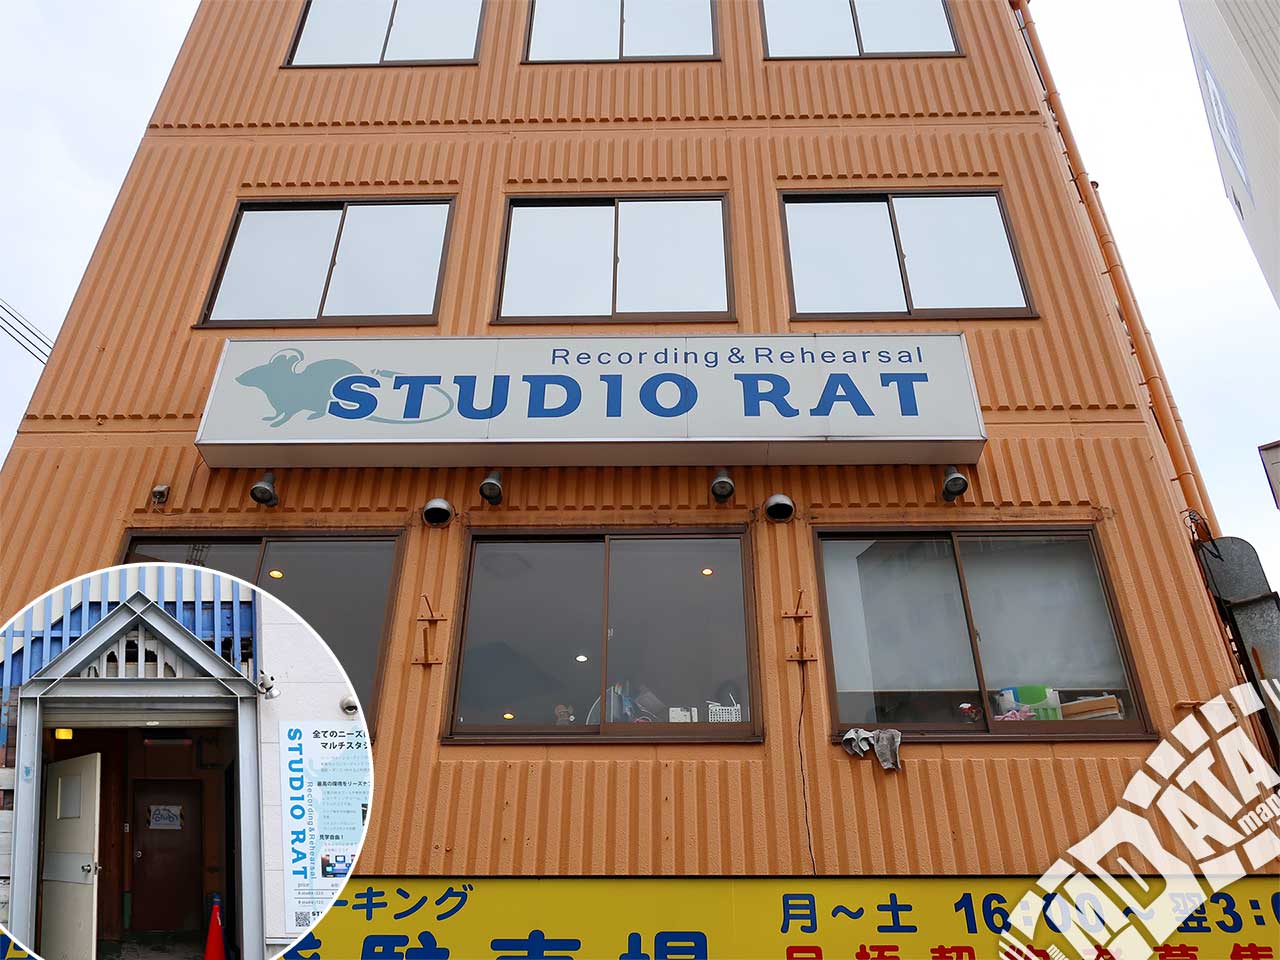 STUDIO RAT 三宮店の写真 撮影日:2019/6/12 Photo taken on 2019/06/12